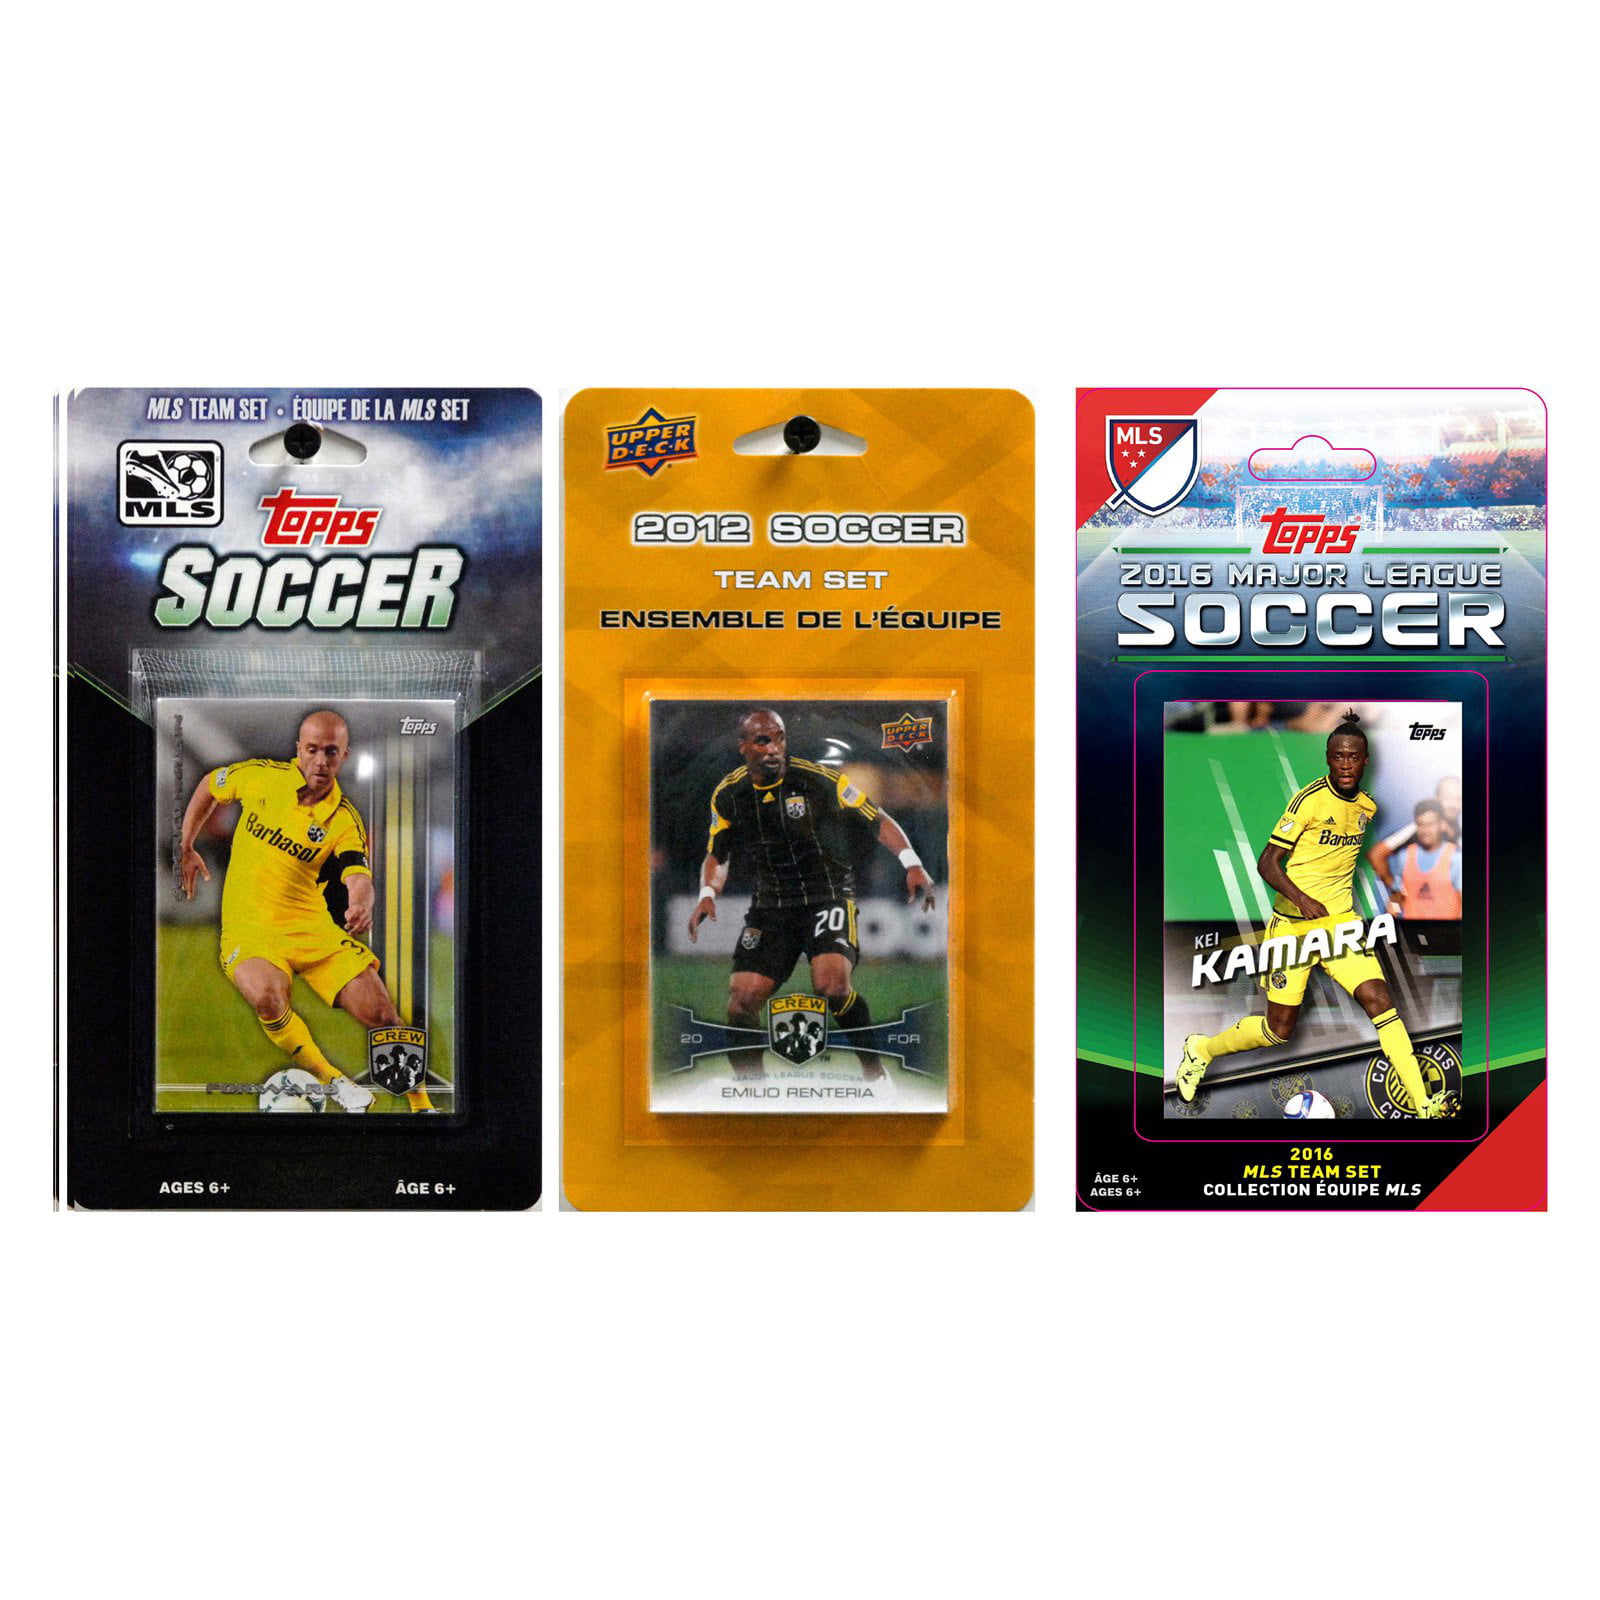 MLS New England Revolution Licensed 2013 Topps Team Card Set and Storage Album 